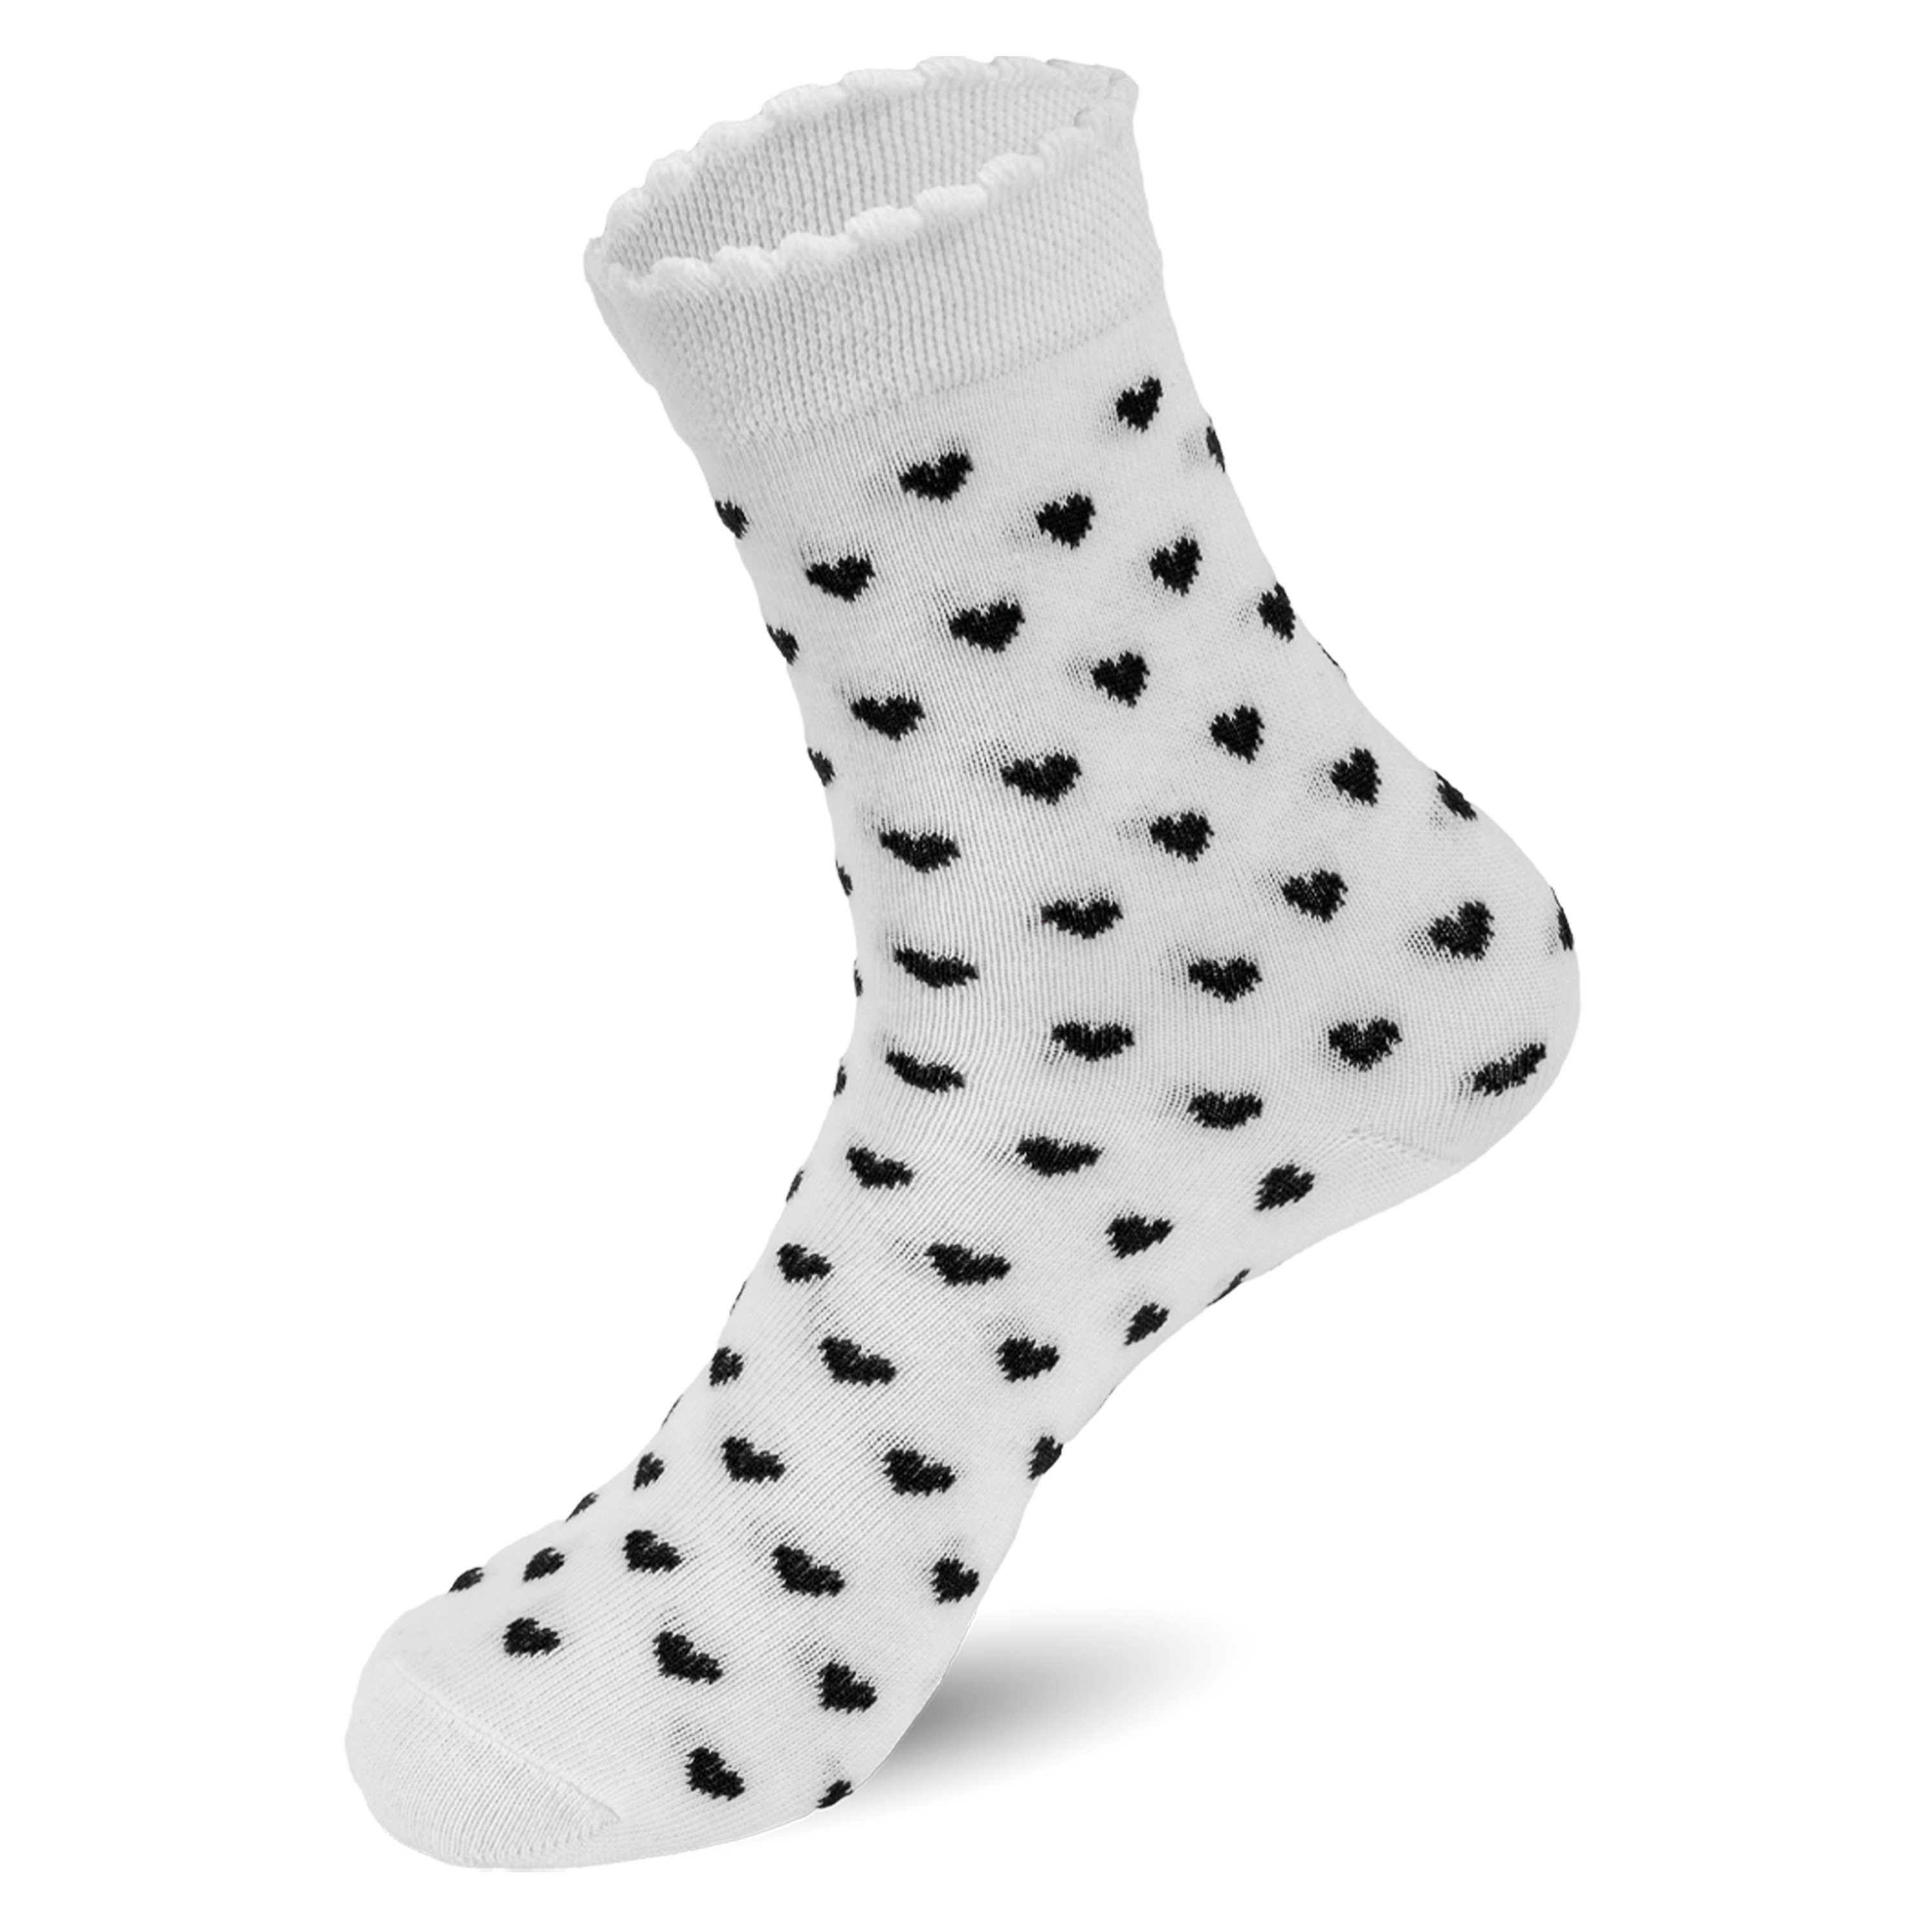 & Mädchen 10 10-Paar) Robust TEXEMP & Strümpfe Kinder Langlebig Socken Kindersocken Socken (Packung, Paar Baumwolle Jungen